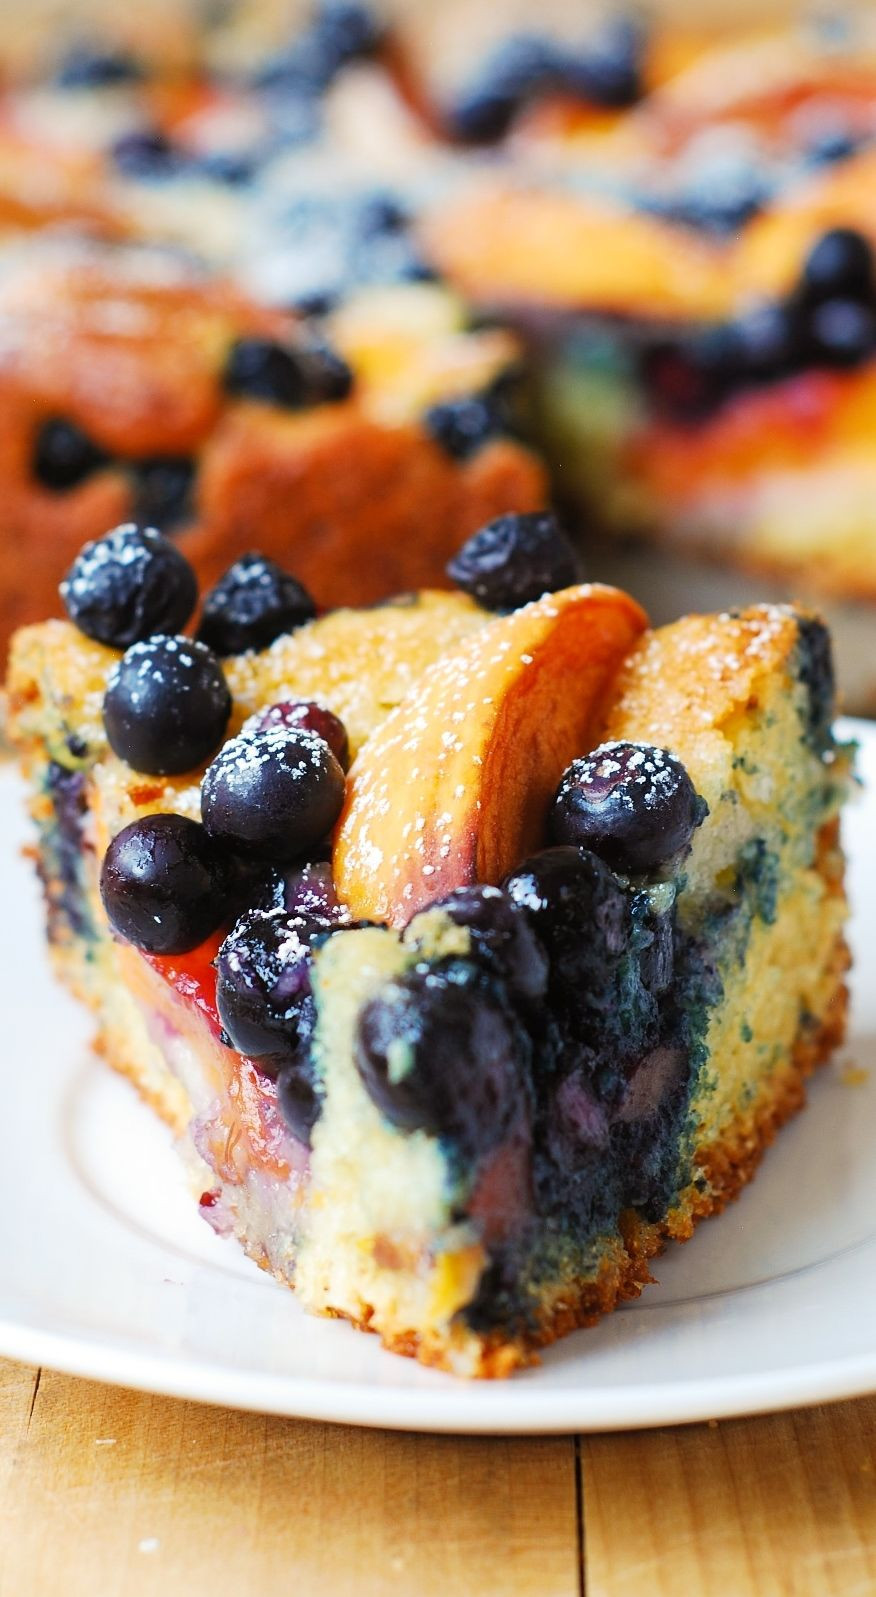 Springform Pan Cake Recipes
 Peach and Blueberry Greek Yogurt Cake Made in a